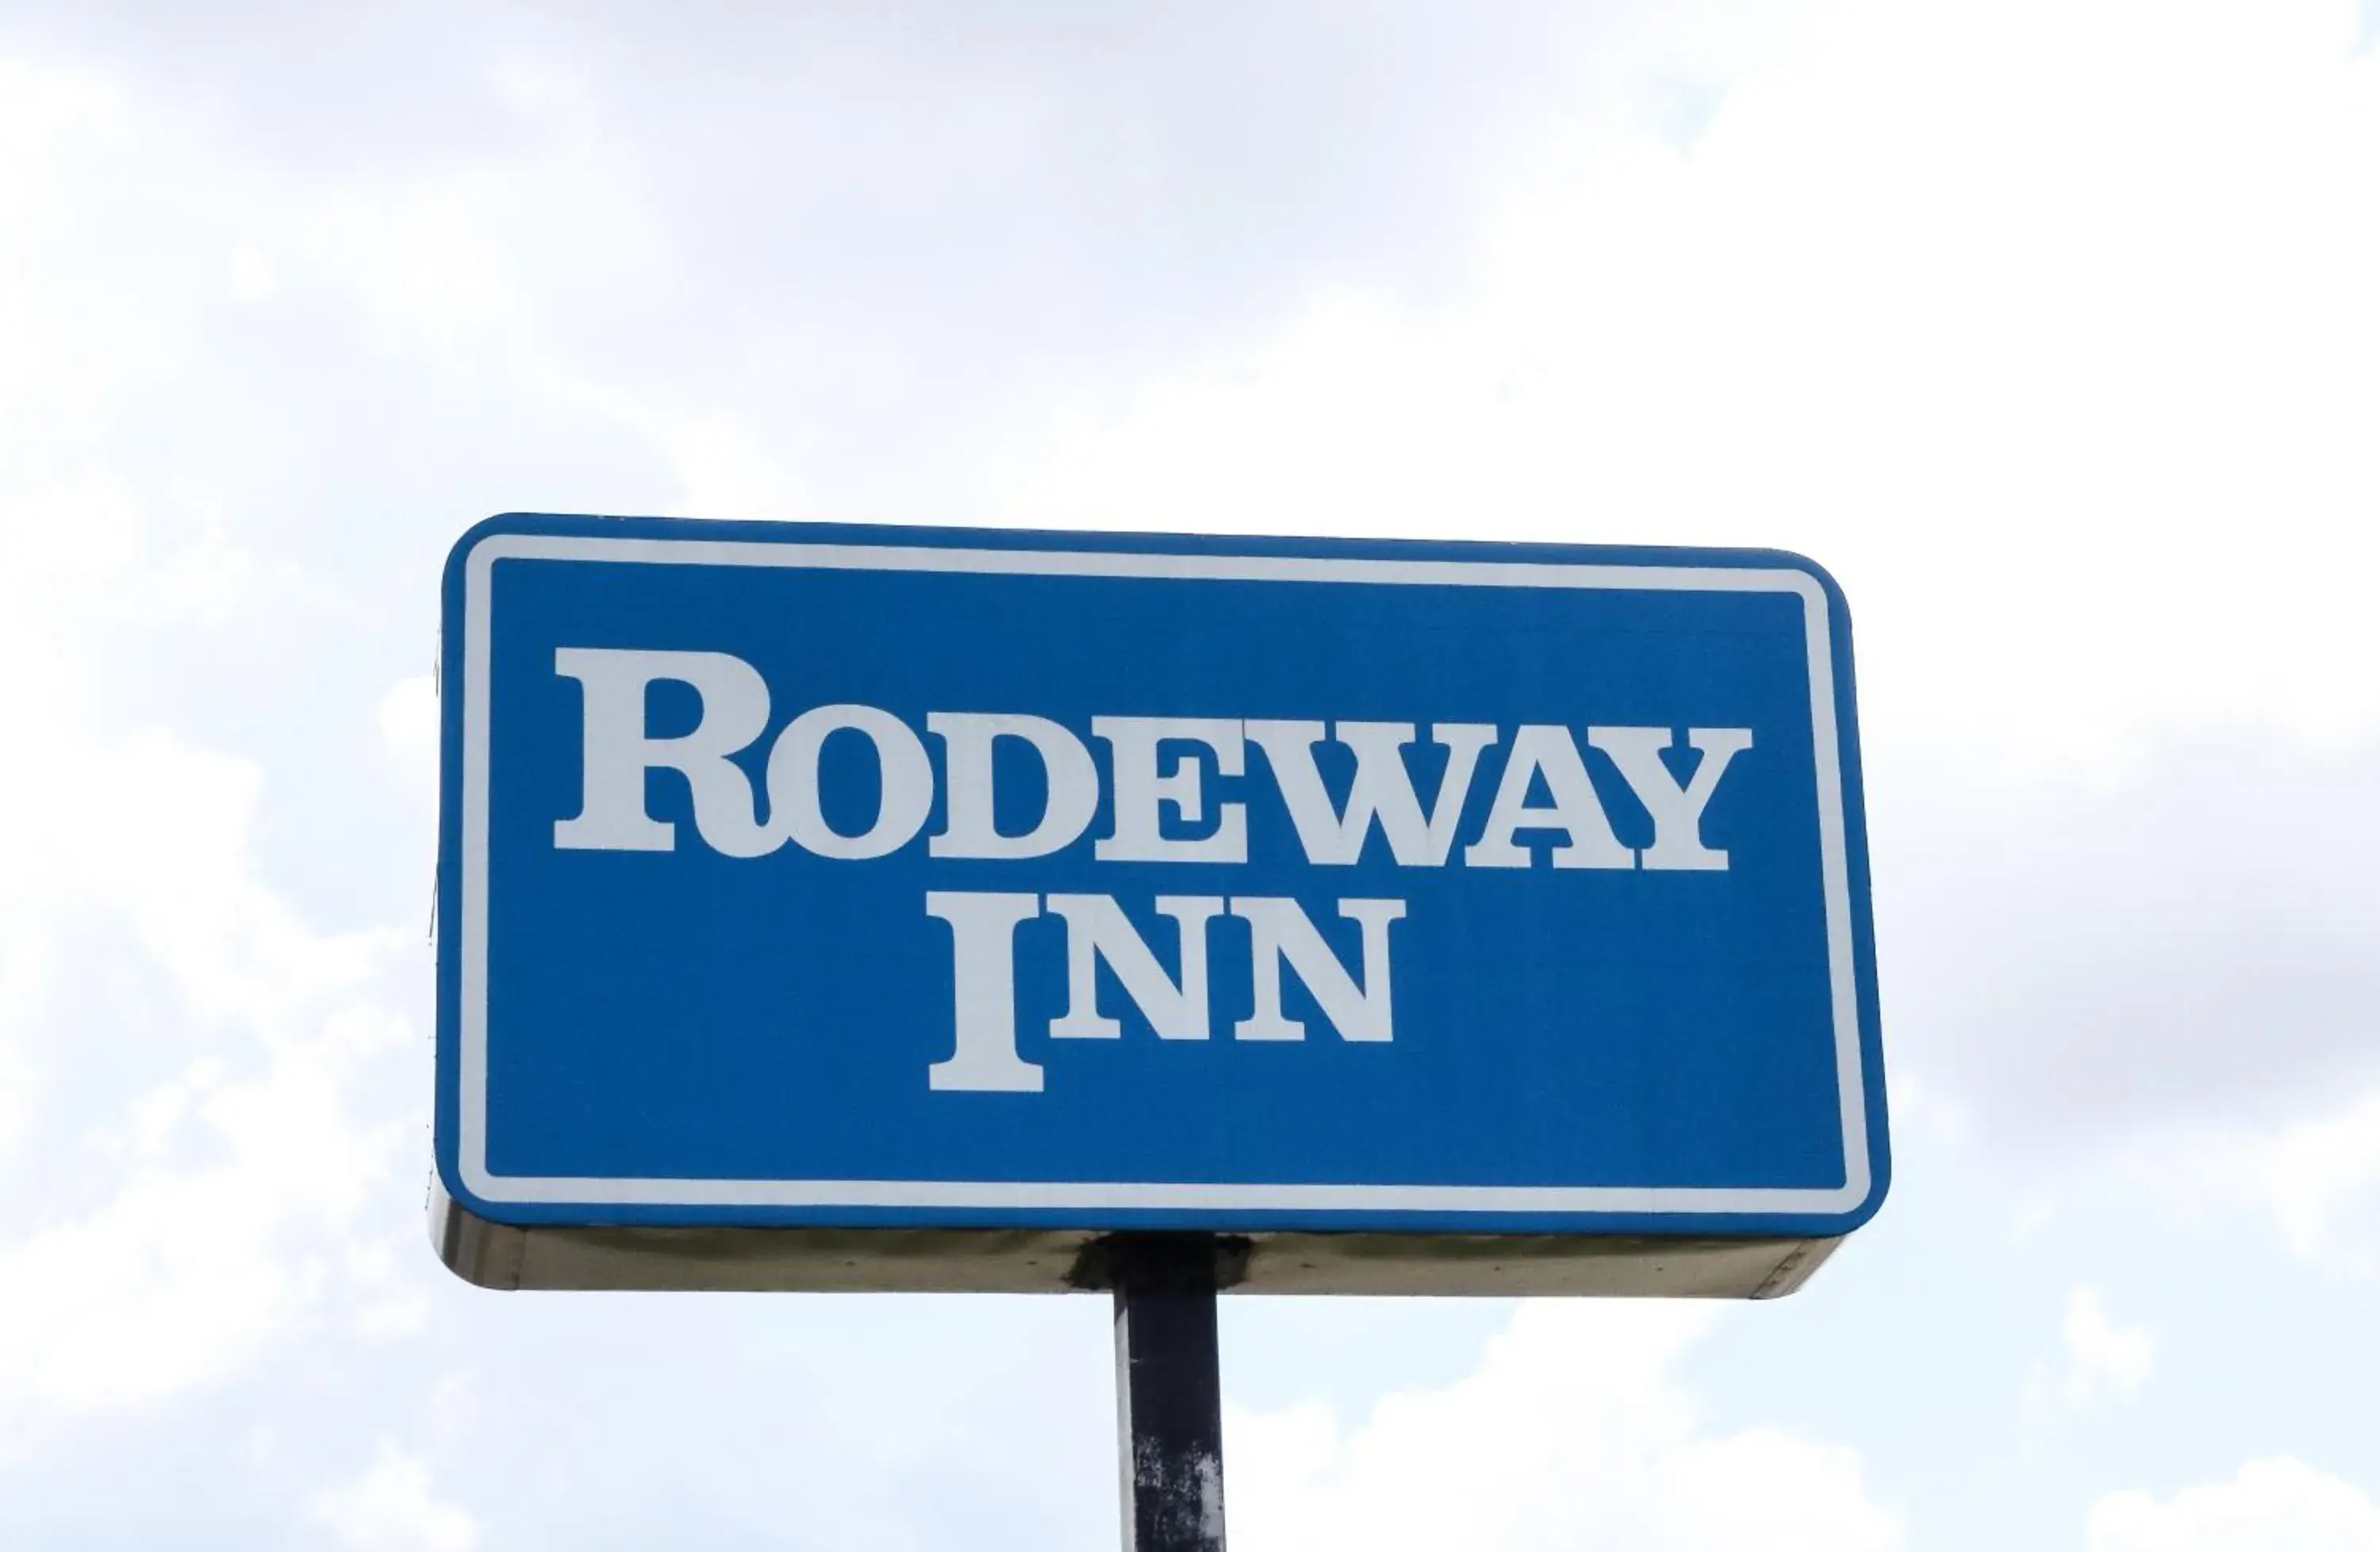 Property logo or sign in Rodeway Inn